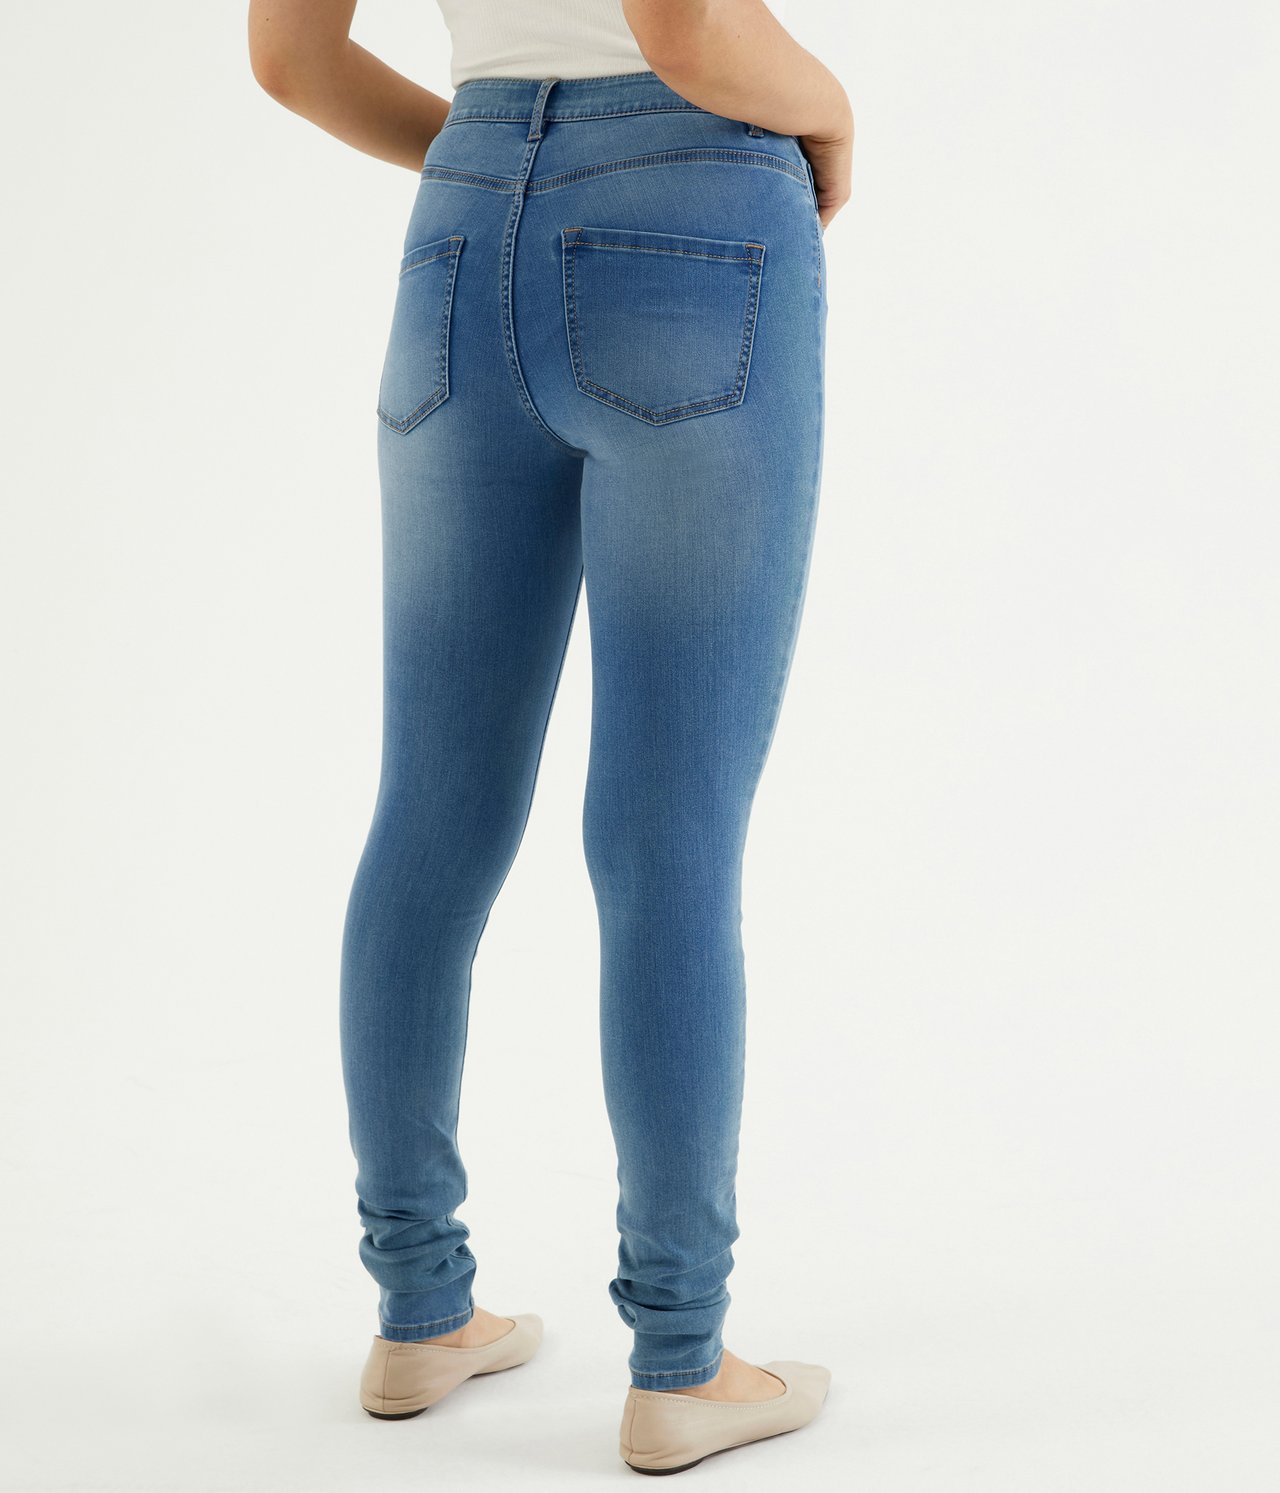 Super slim jeans extra long leg - Denim - 4